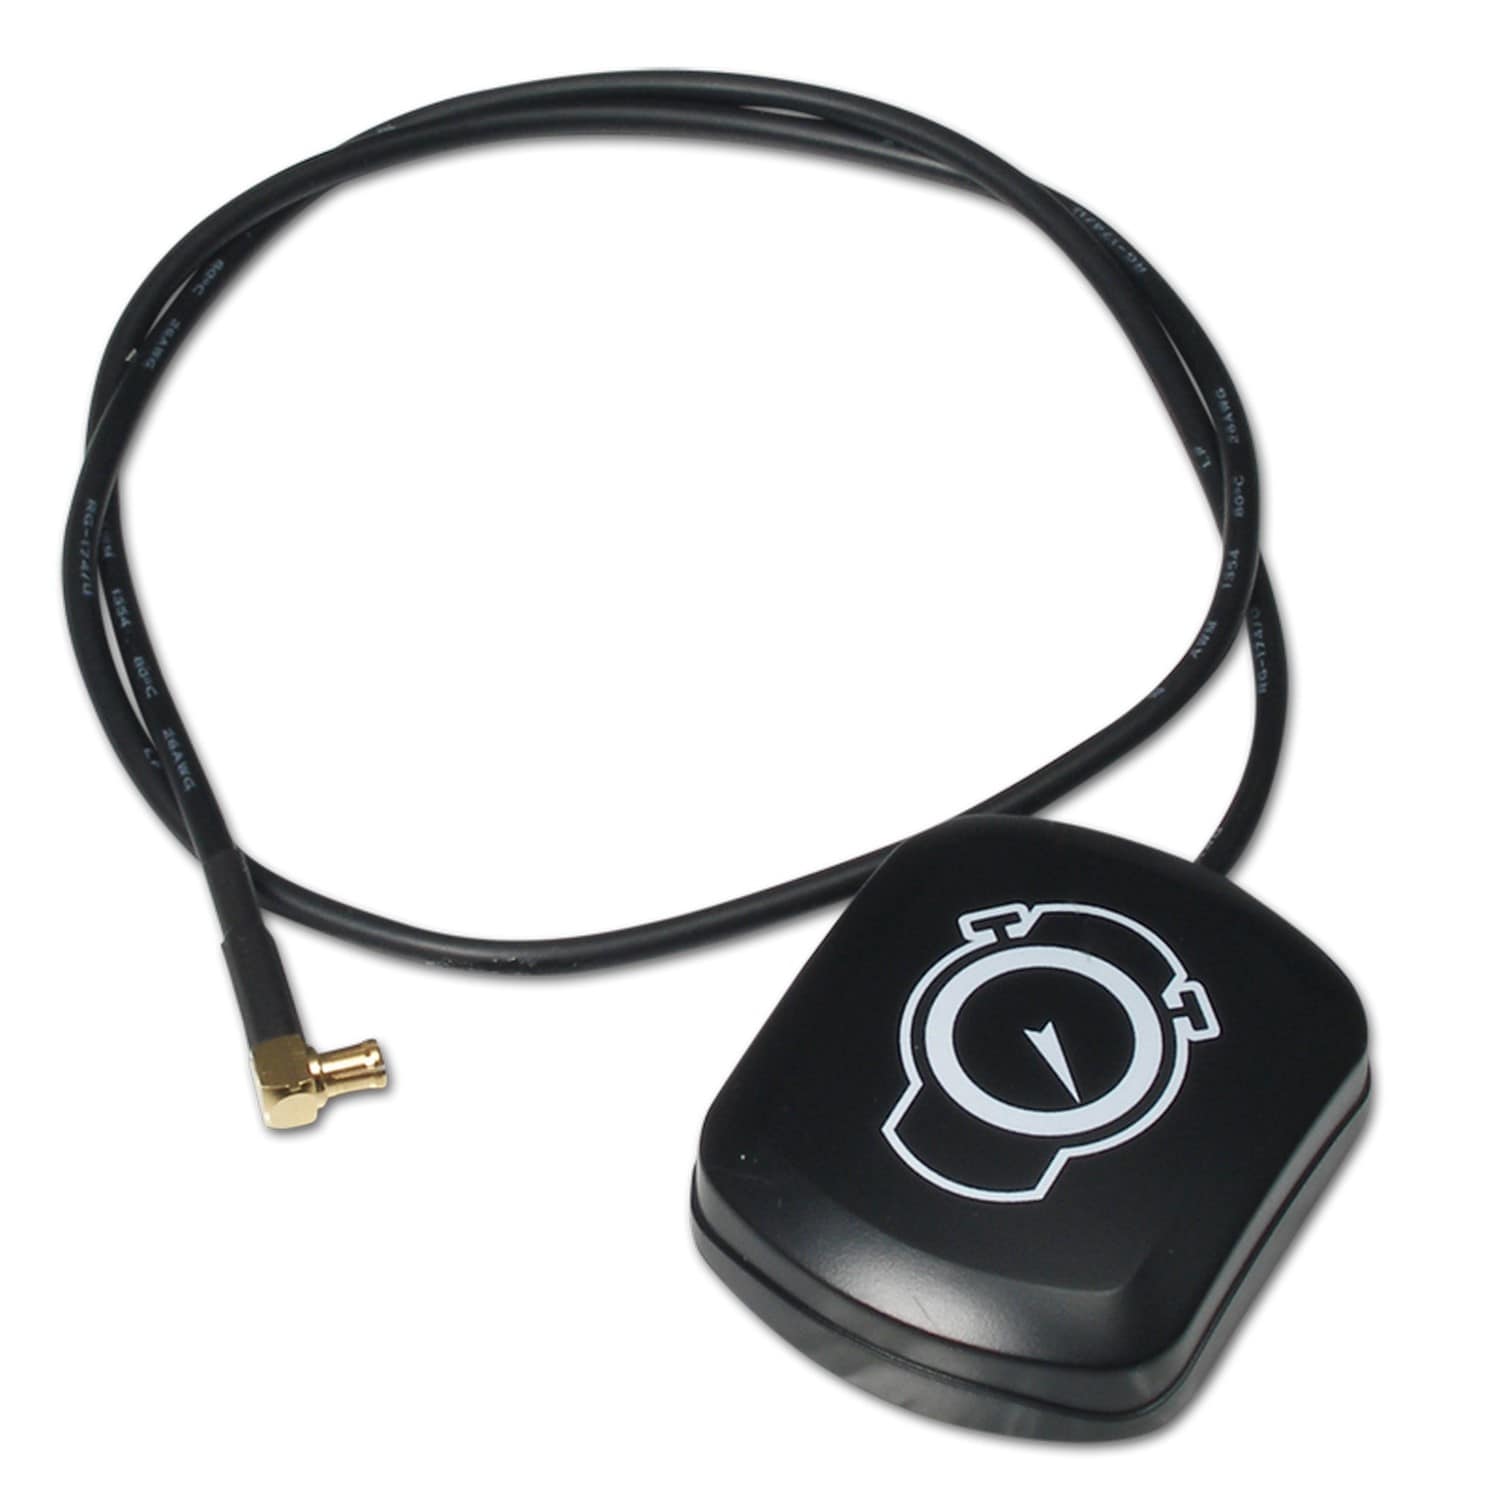 GPS Antenn för Unigo 6005